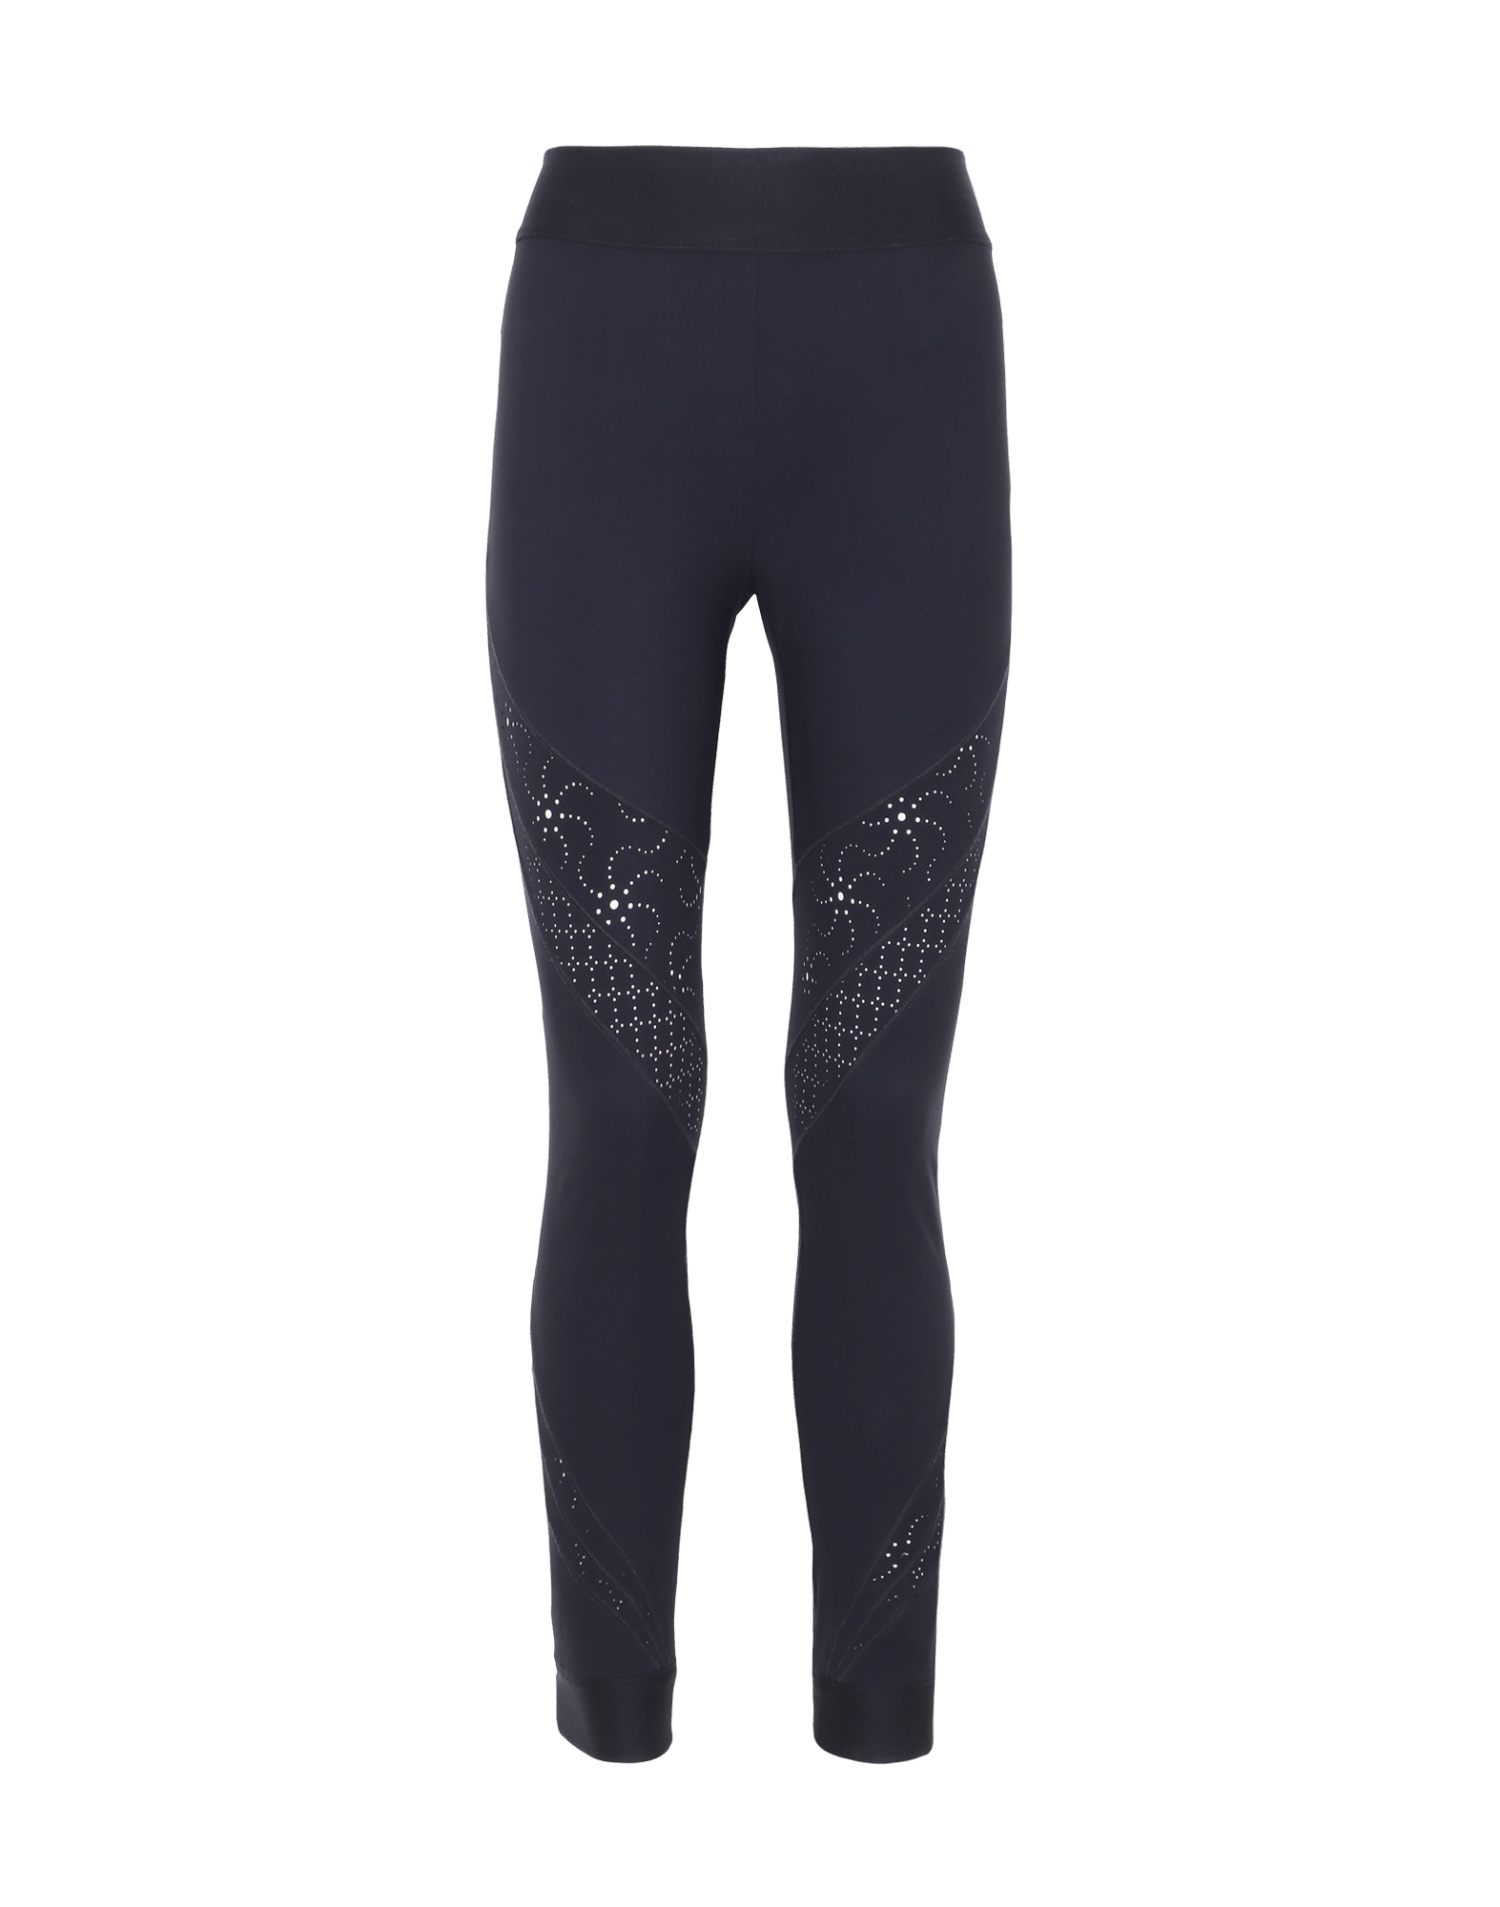 Semi-transparent leggings